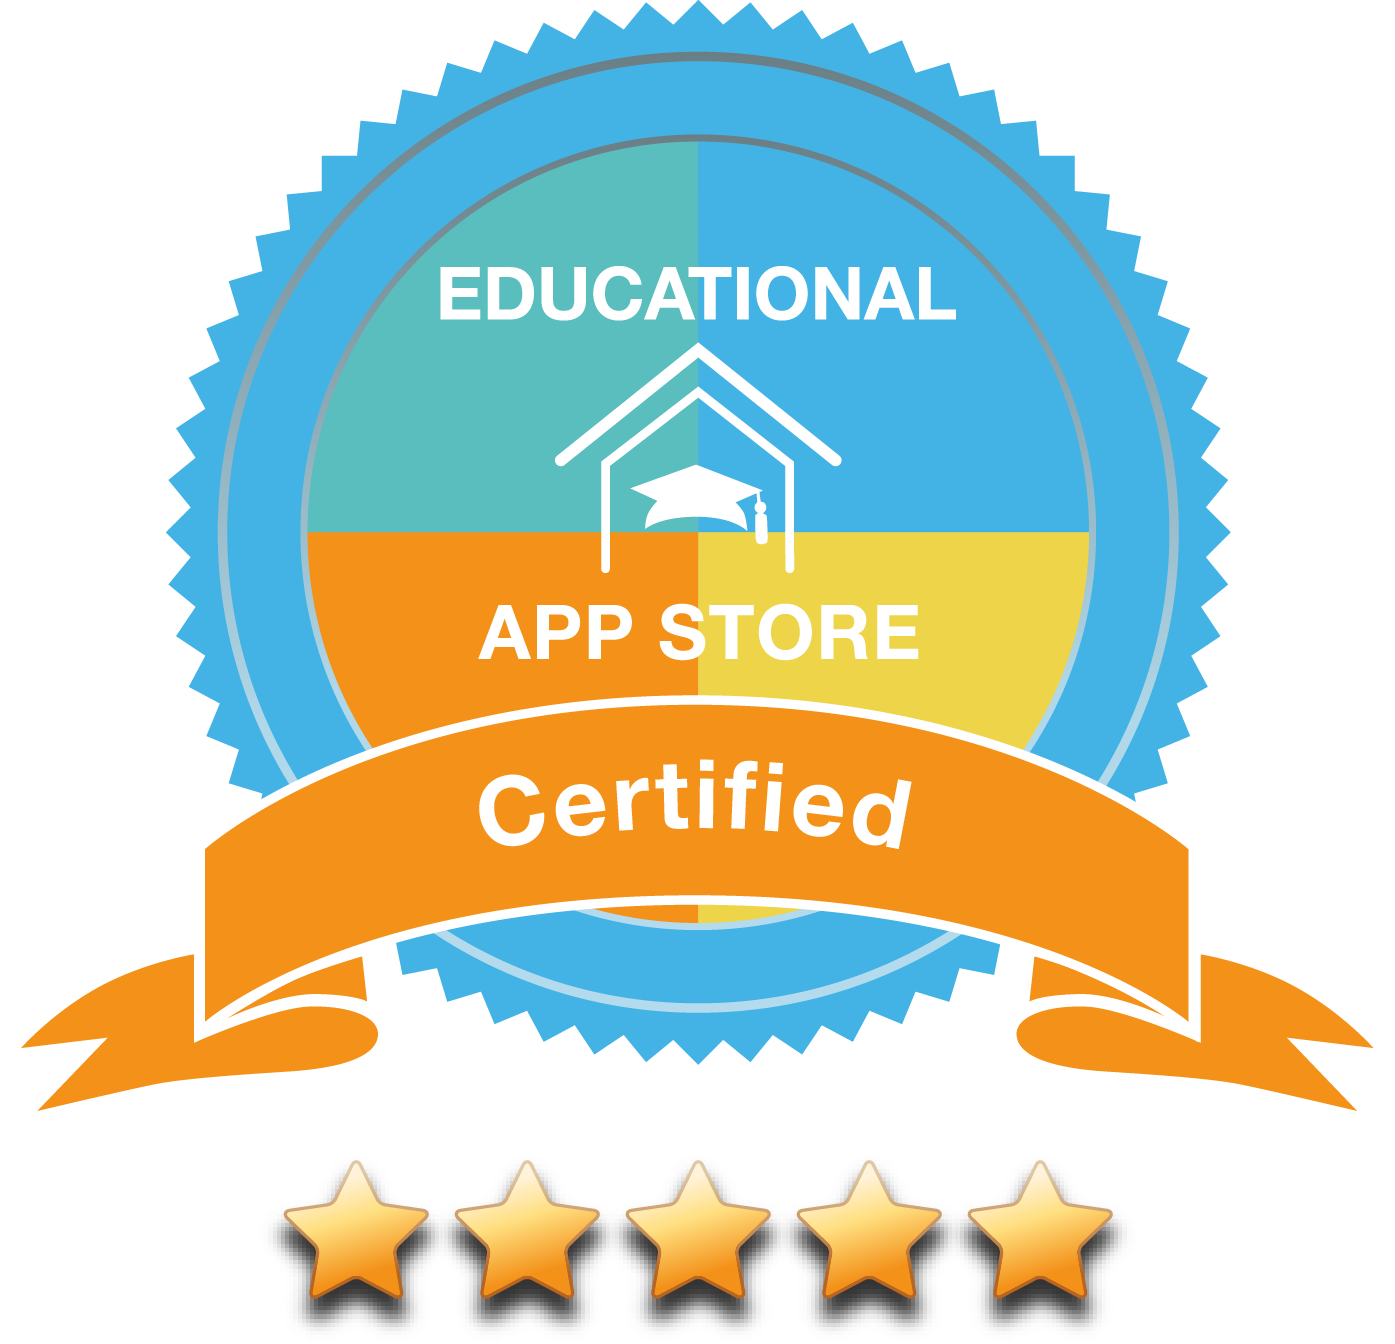 5 Stars Educational App Store Certification